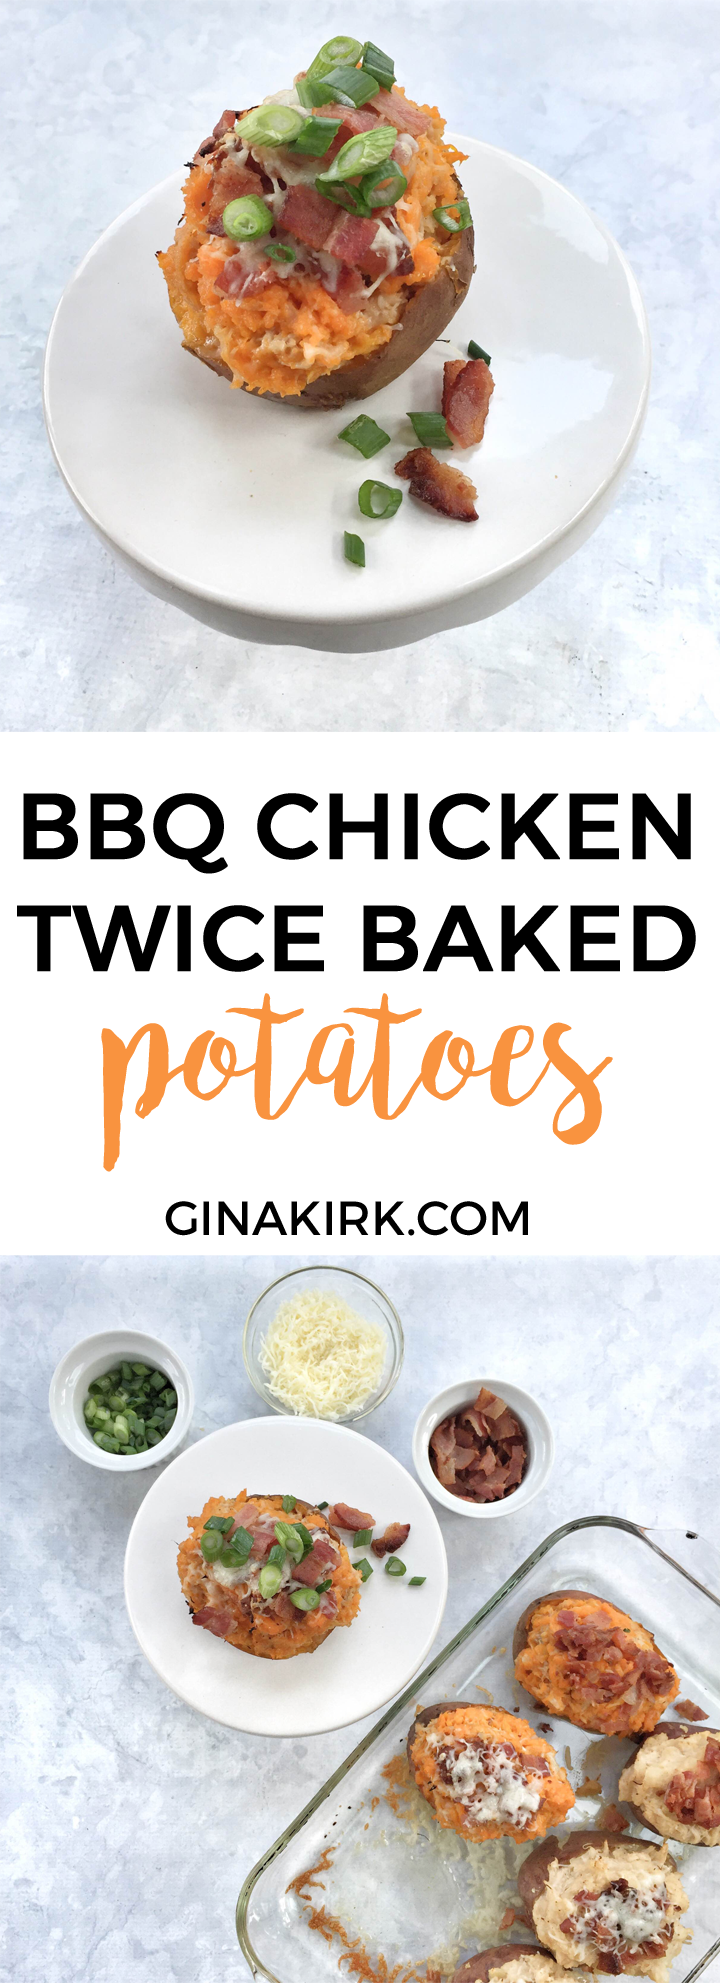 BBQ chicken twice baked potatoes | Sweet potato ideas and recipes | Simple family meals GinaKirk.com @ginaekirk